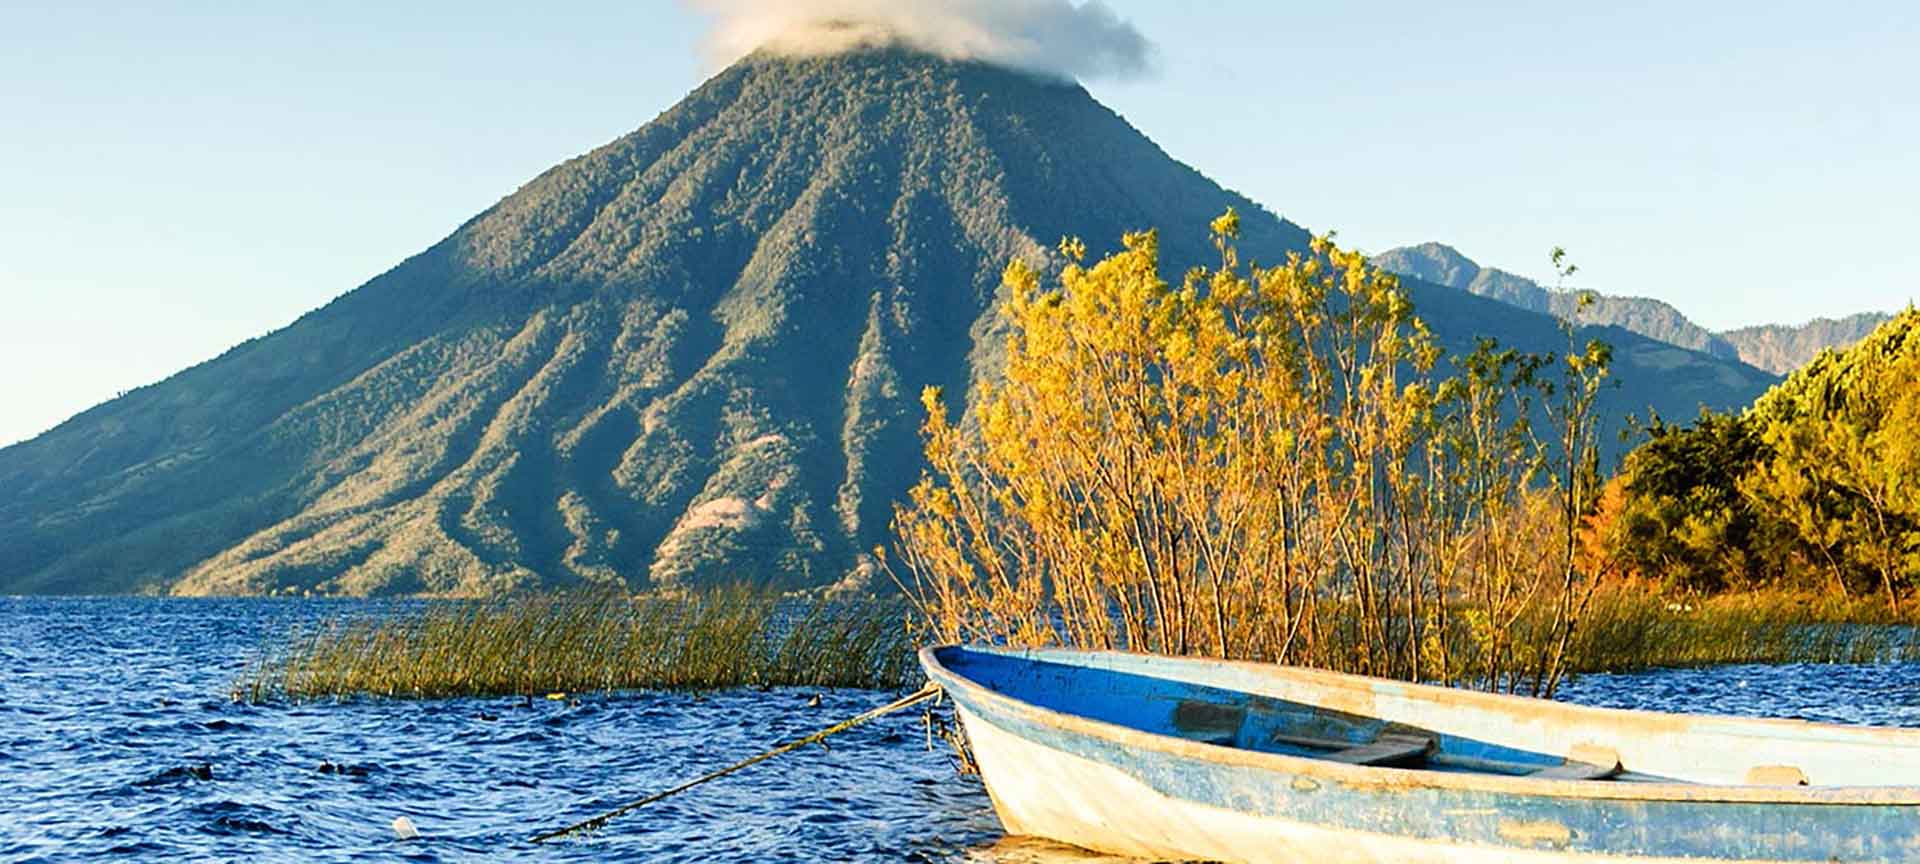 Mountain and water in Guatemala